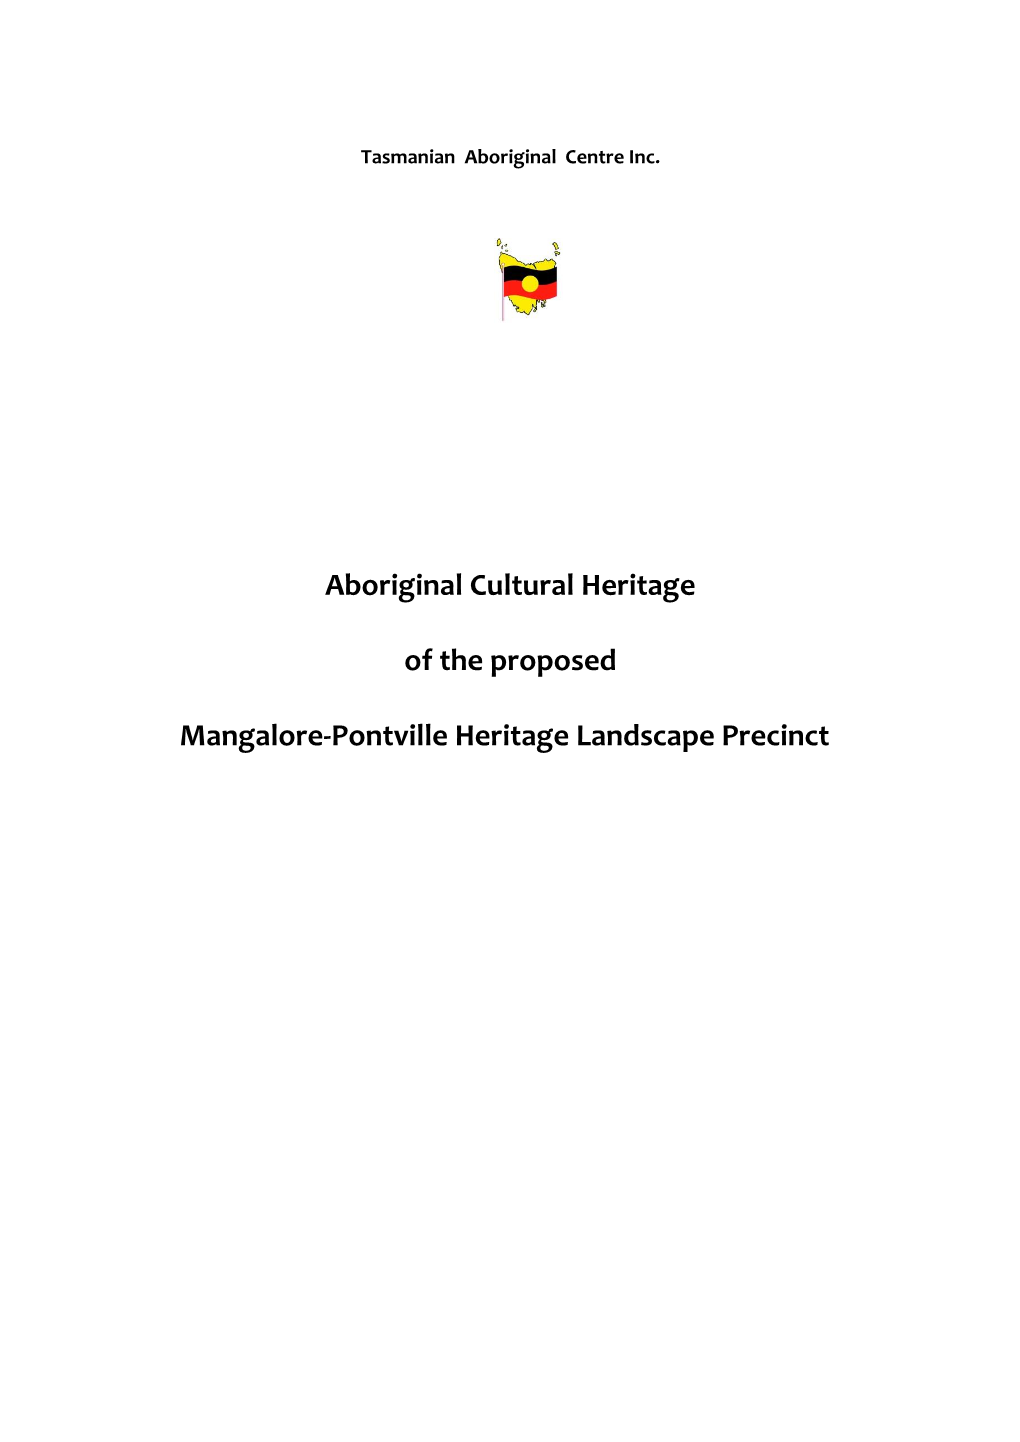 Aboriginal Cultural Heritage of the Proposed Mangalore-Pontville